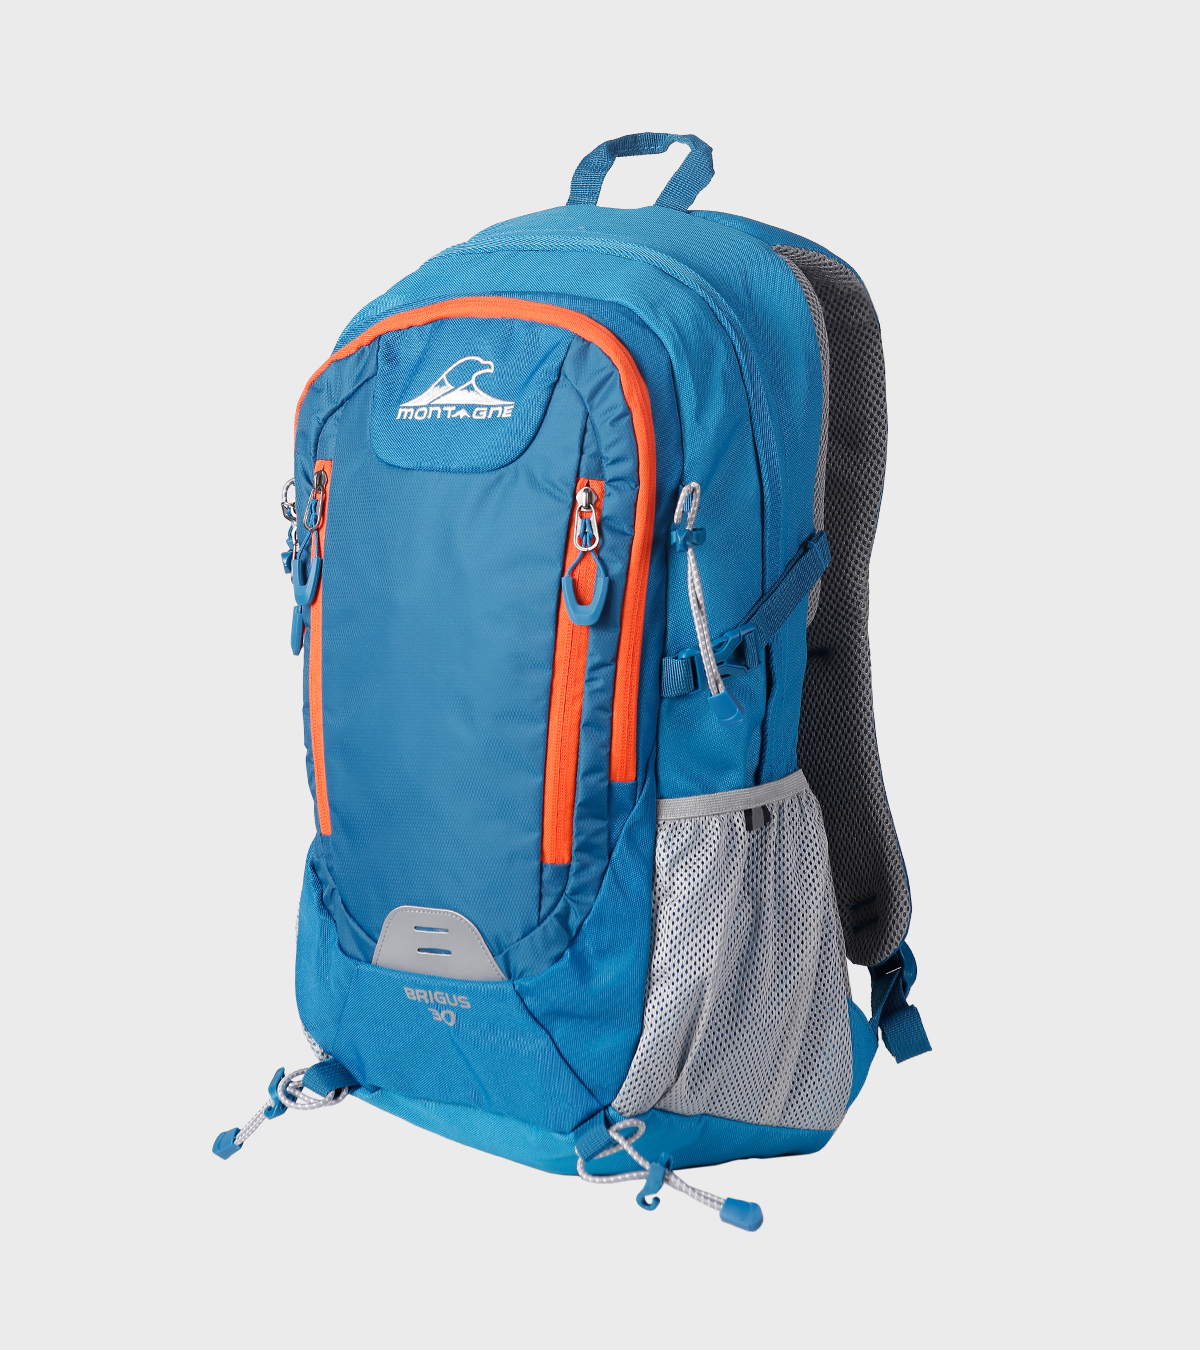 Montagne: mochilas, mochila, trekking, urbana, escolar, mochila